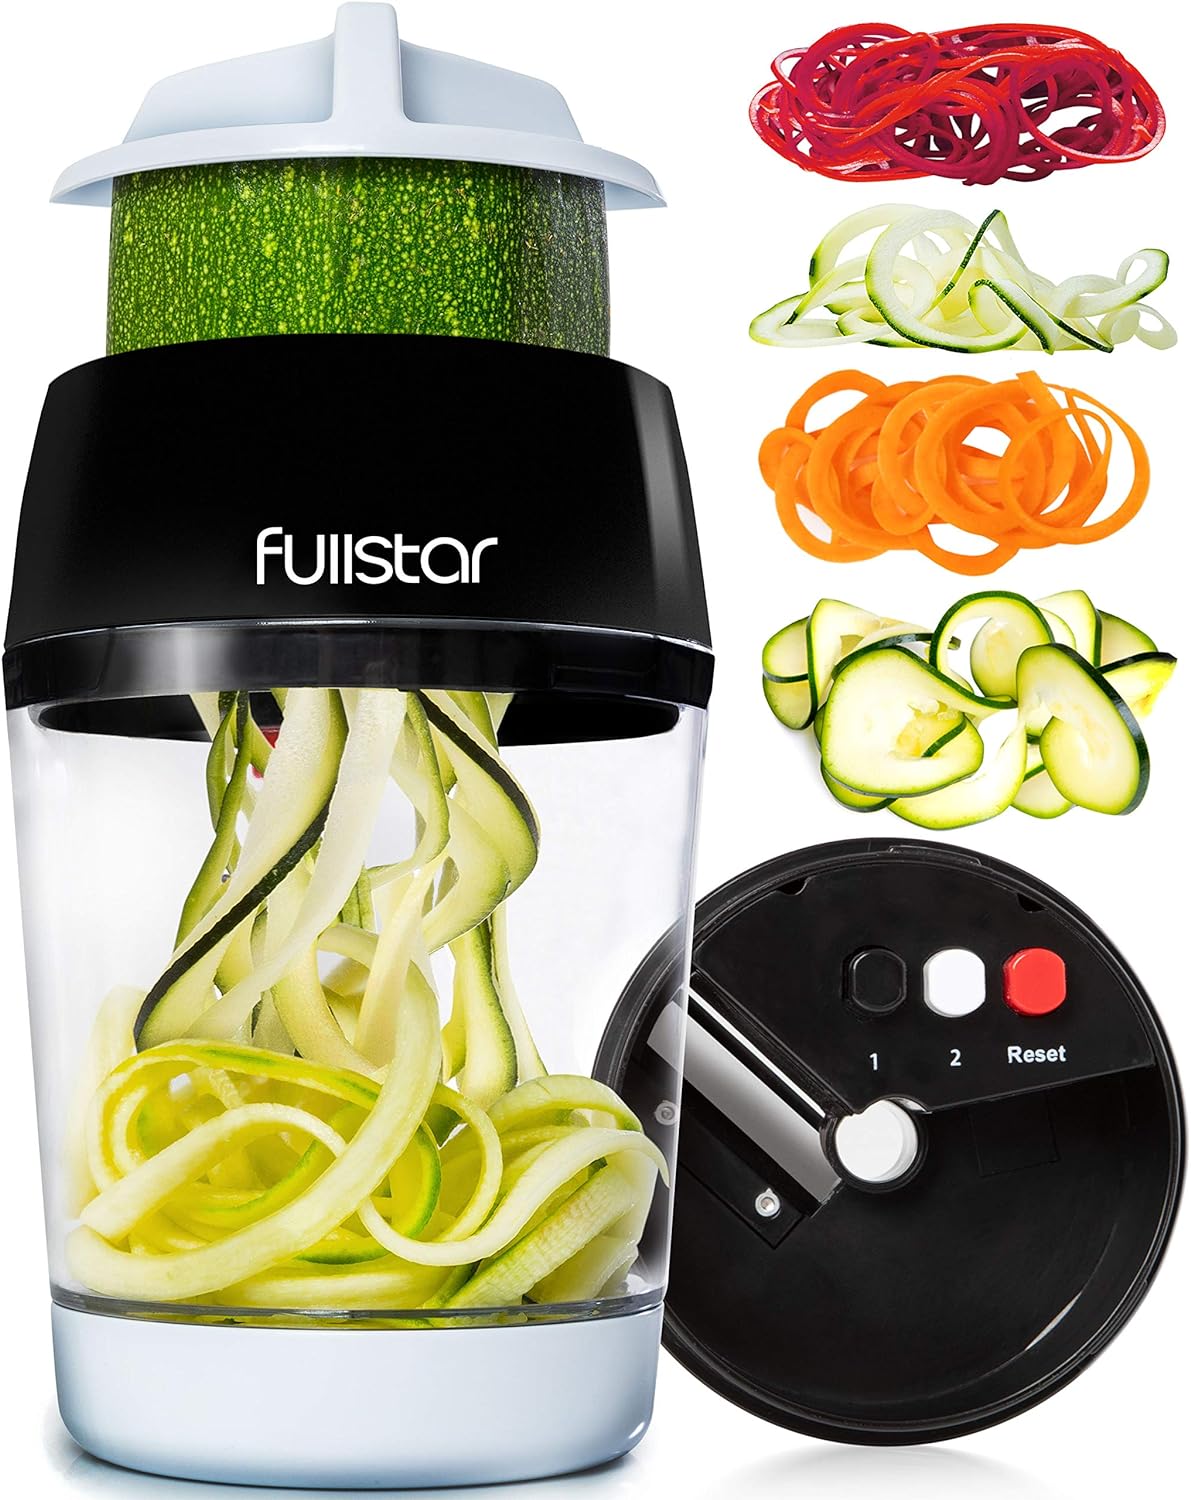 "Fullstar Mandoline Slicer Spiralizer: 7-in-1 Vegetable Chopper, Onion Chopper, Food Cutter, Grater, Zucchini Spaghetti Maker"